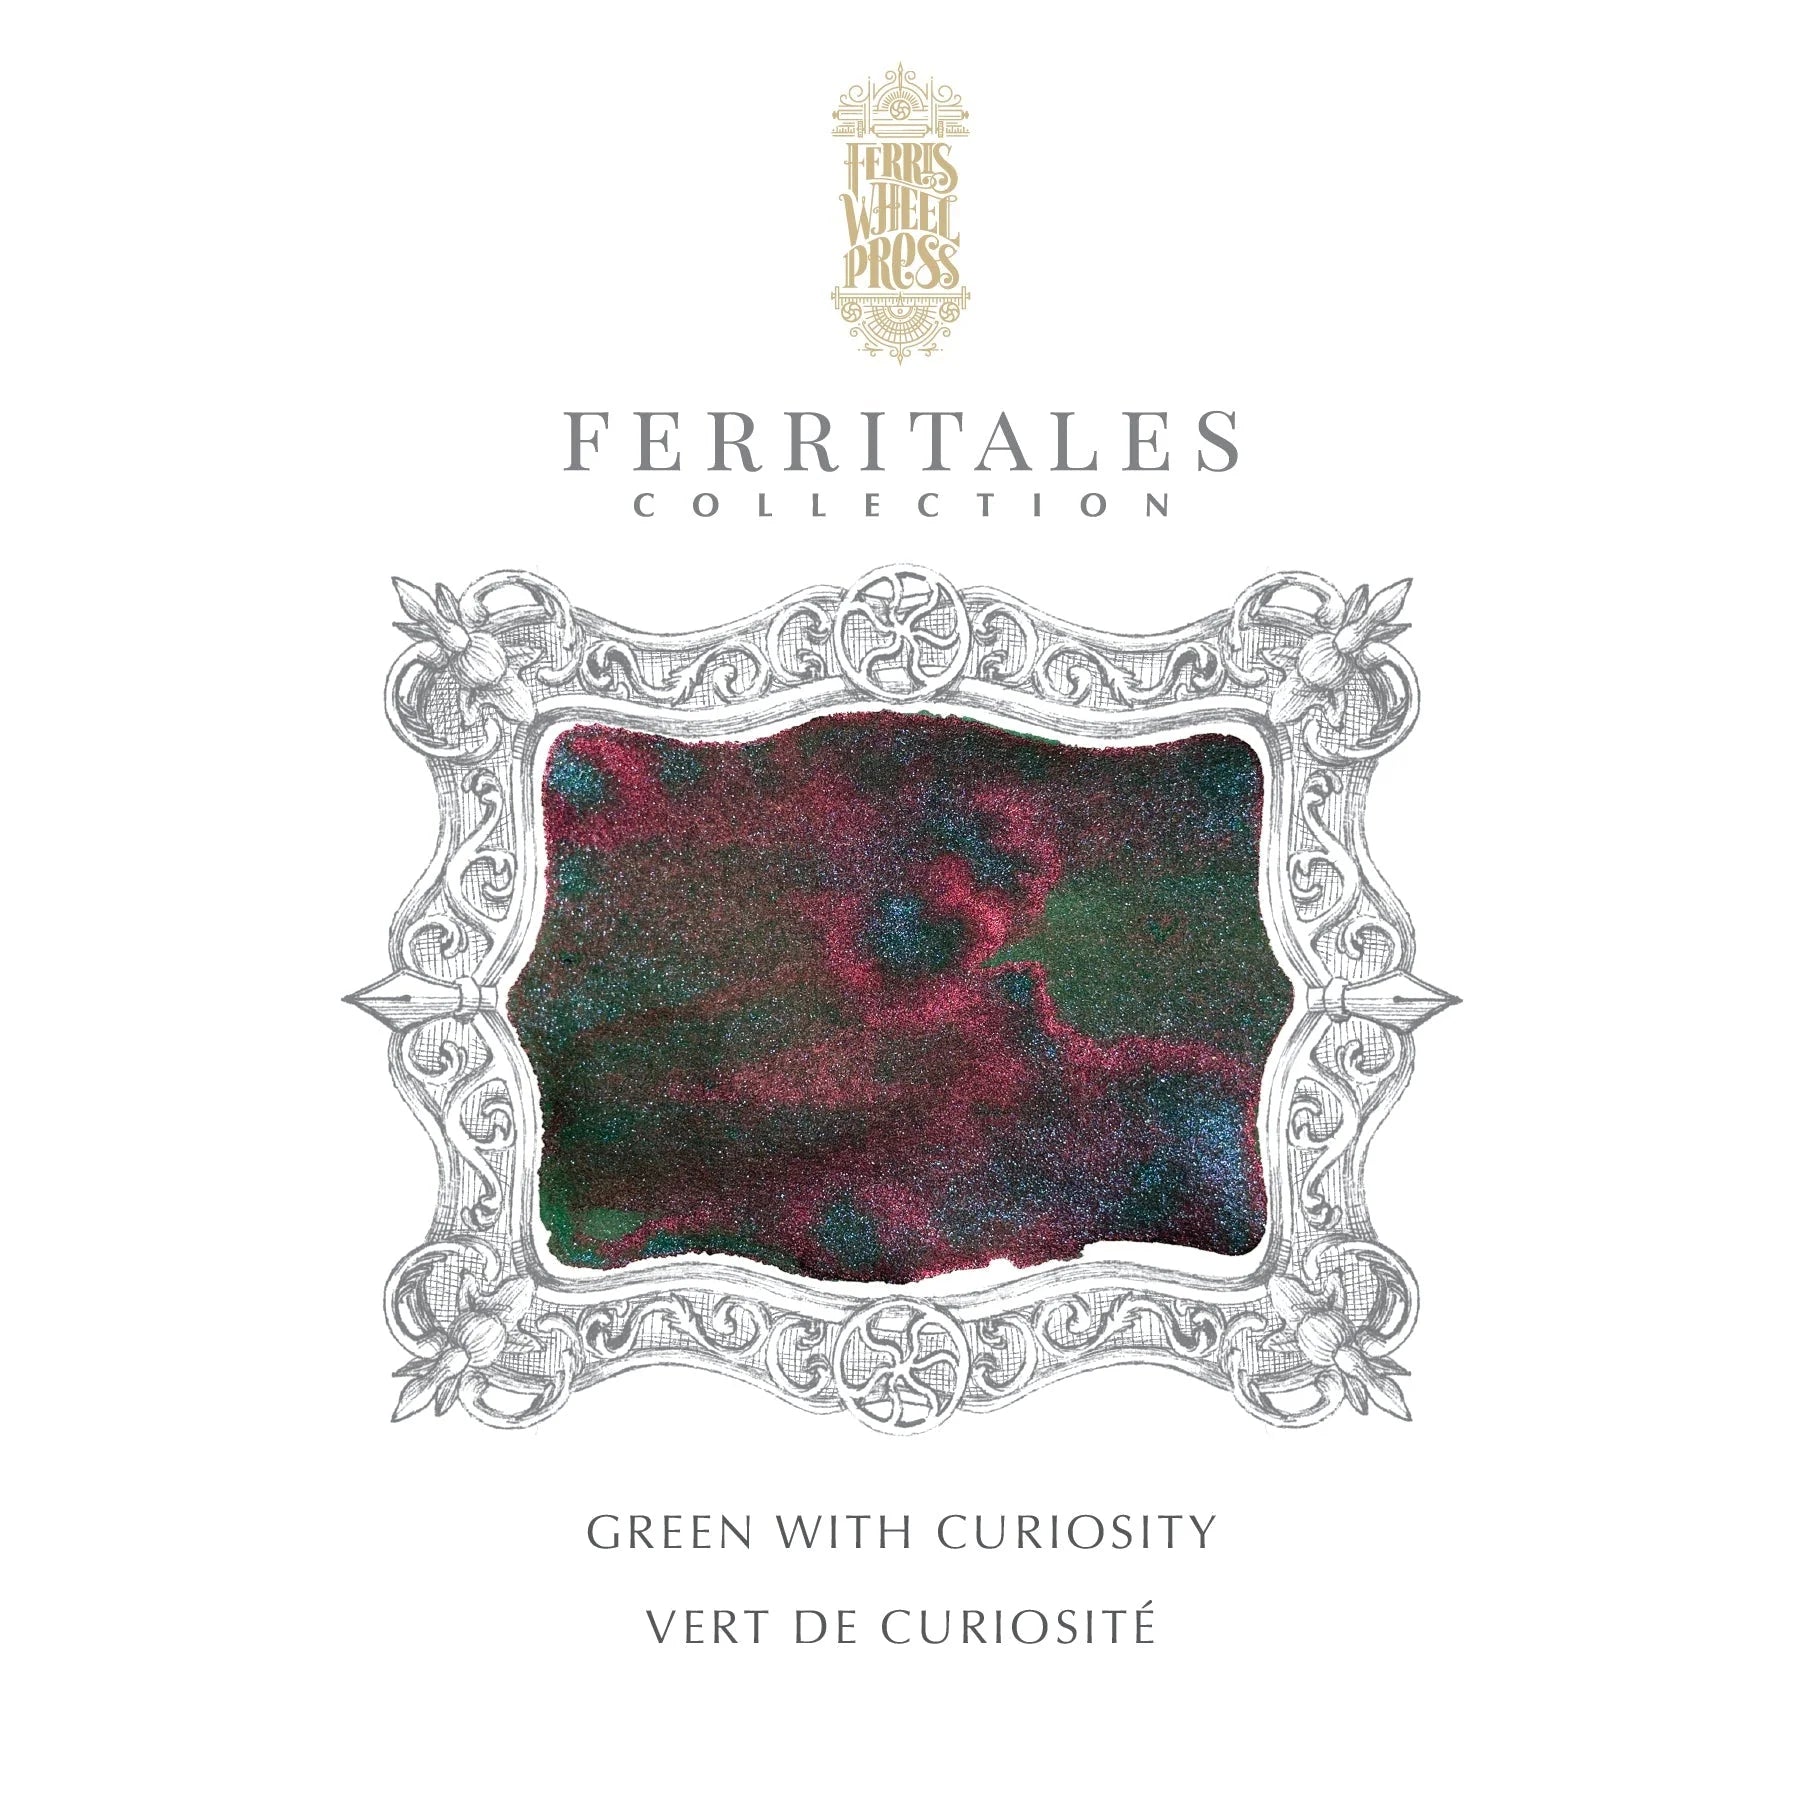 Ferris Wheel Press - FerriTales | Down the Rabbit Hole - Green with Curiosity-Inkt-DutchMills